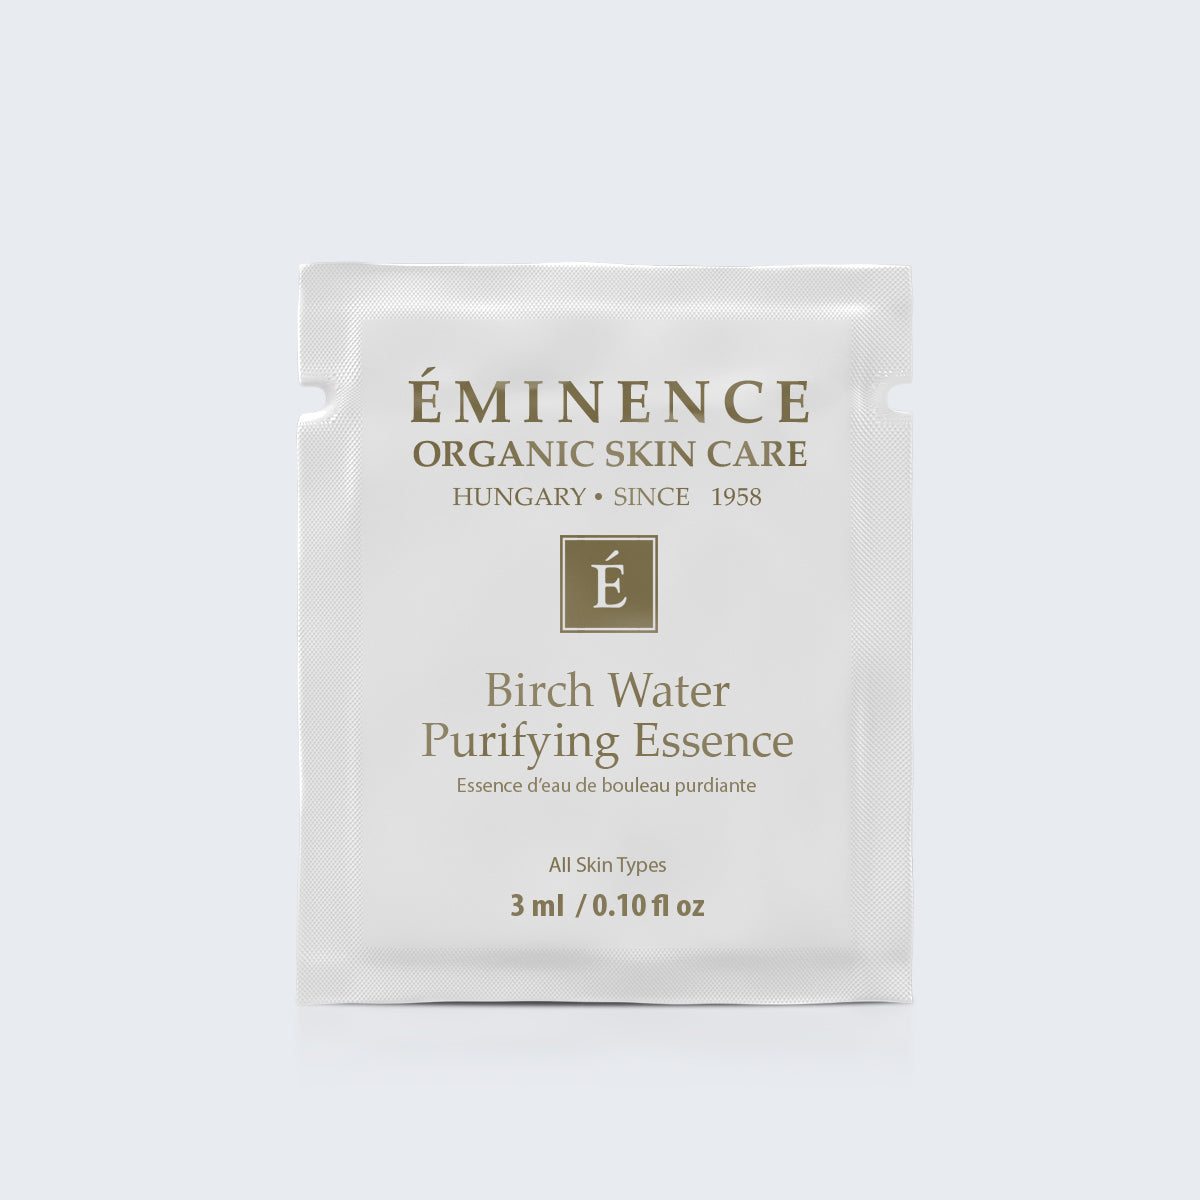 Eminence Organics Birch Water Purifying Essence Card Sample